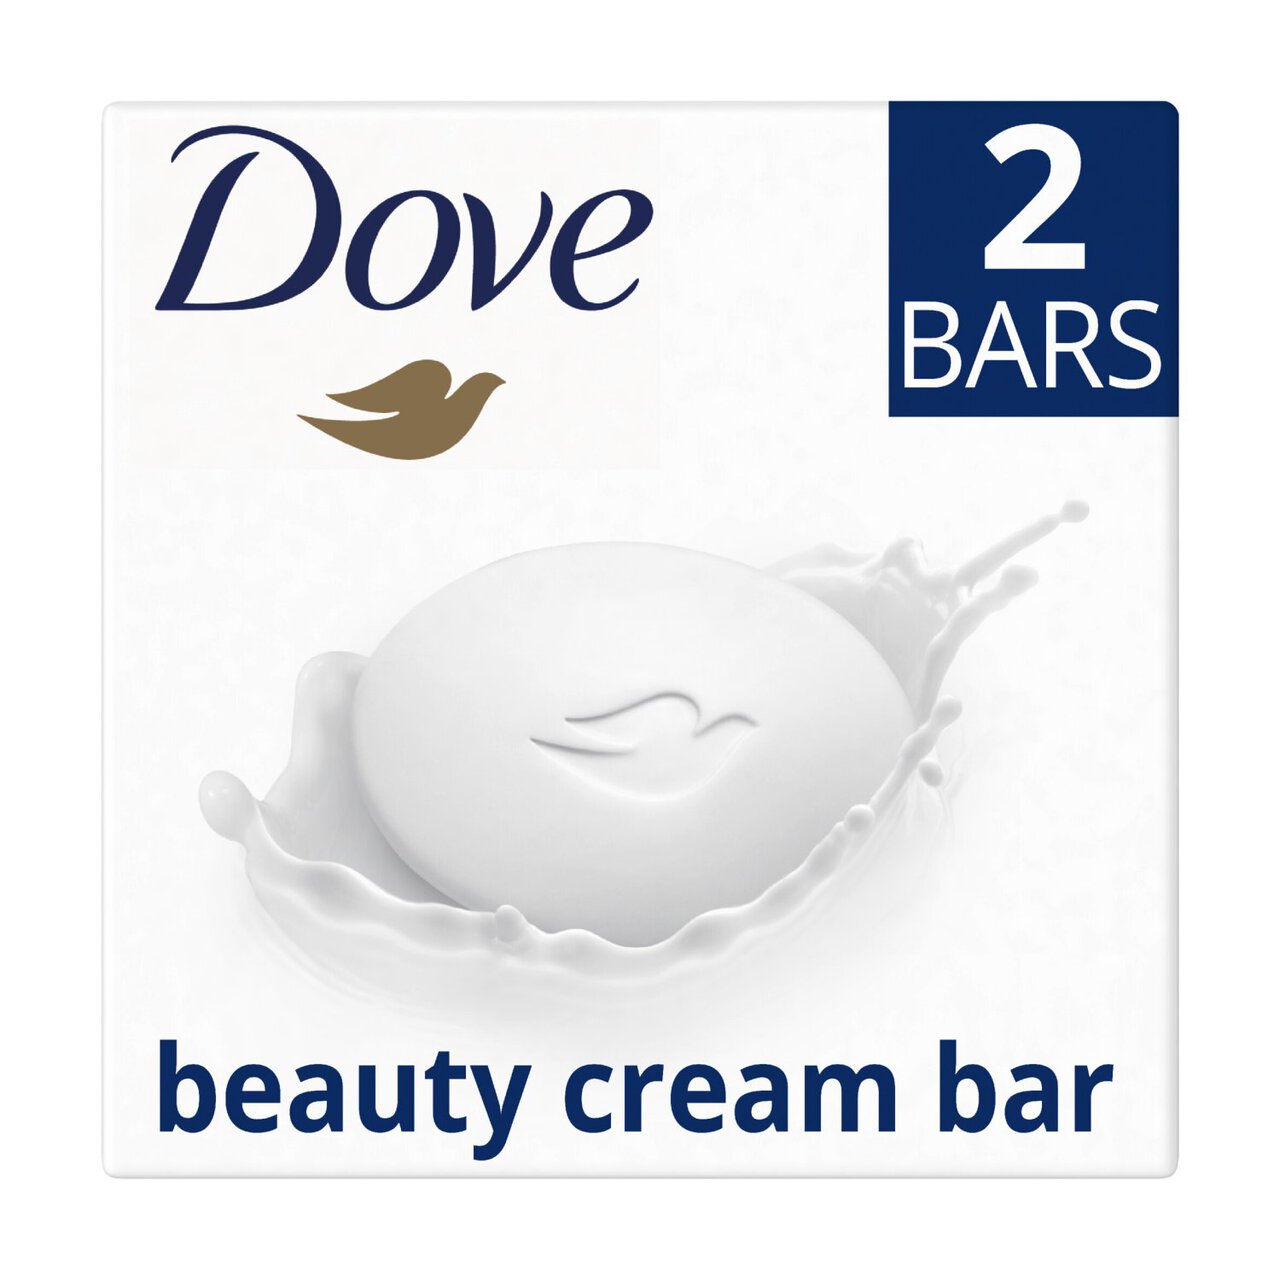 Dove Original Beauty Cream Bar 2 x 90g